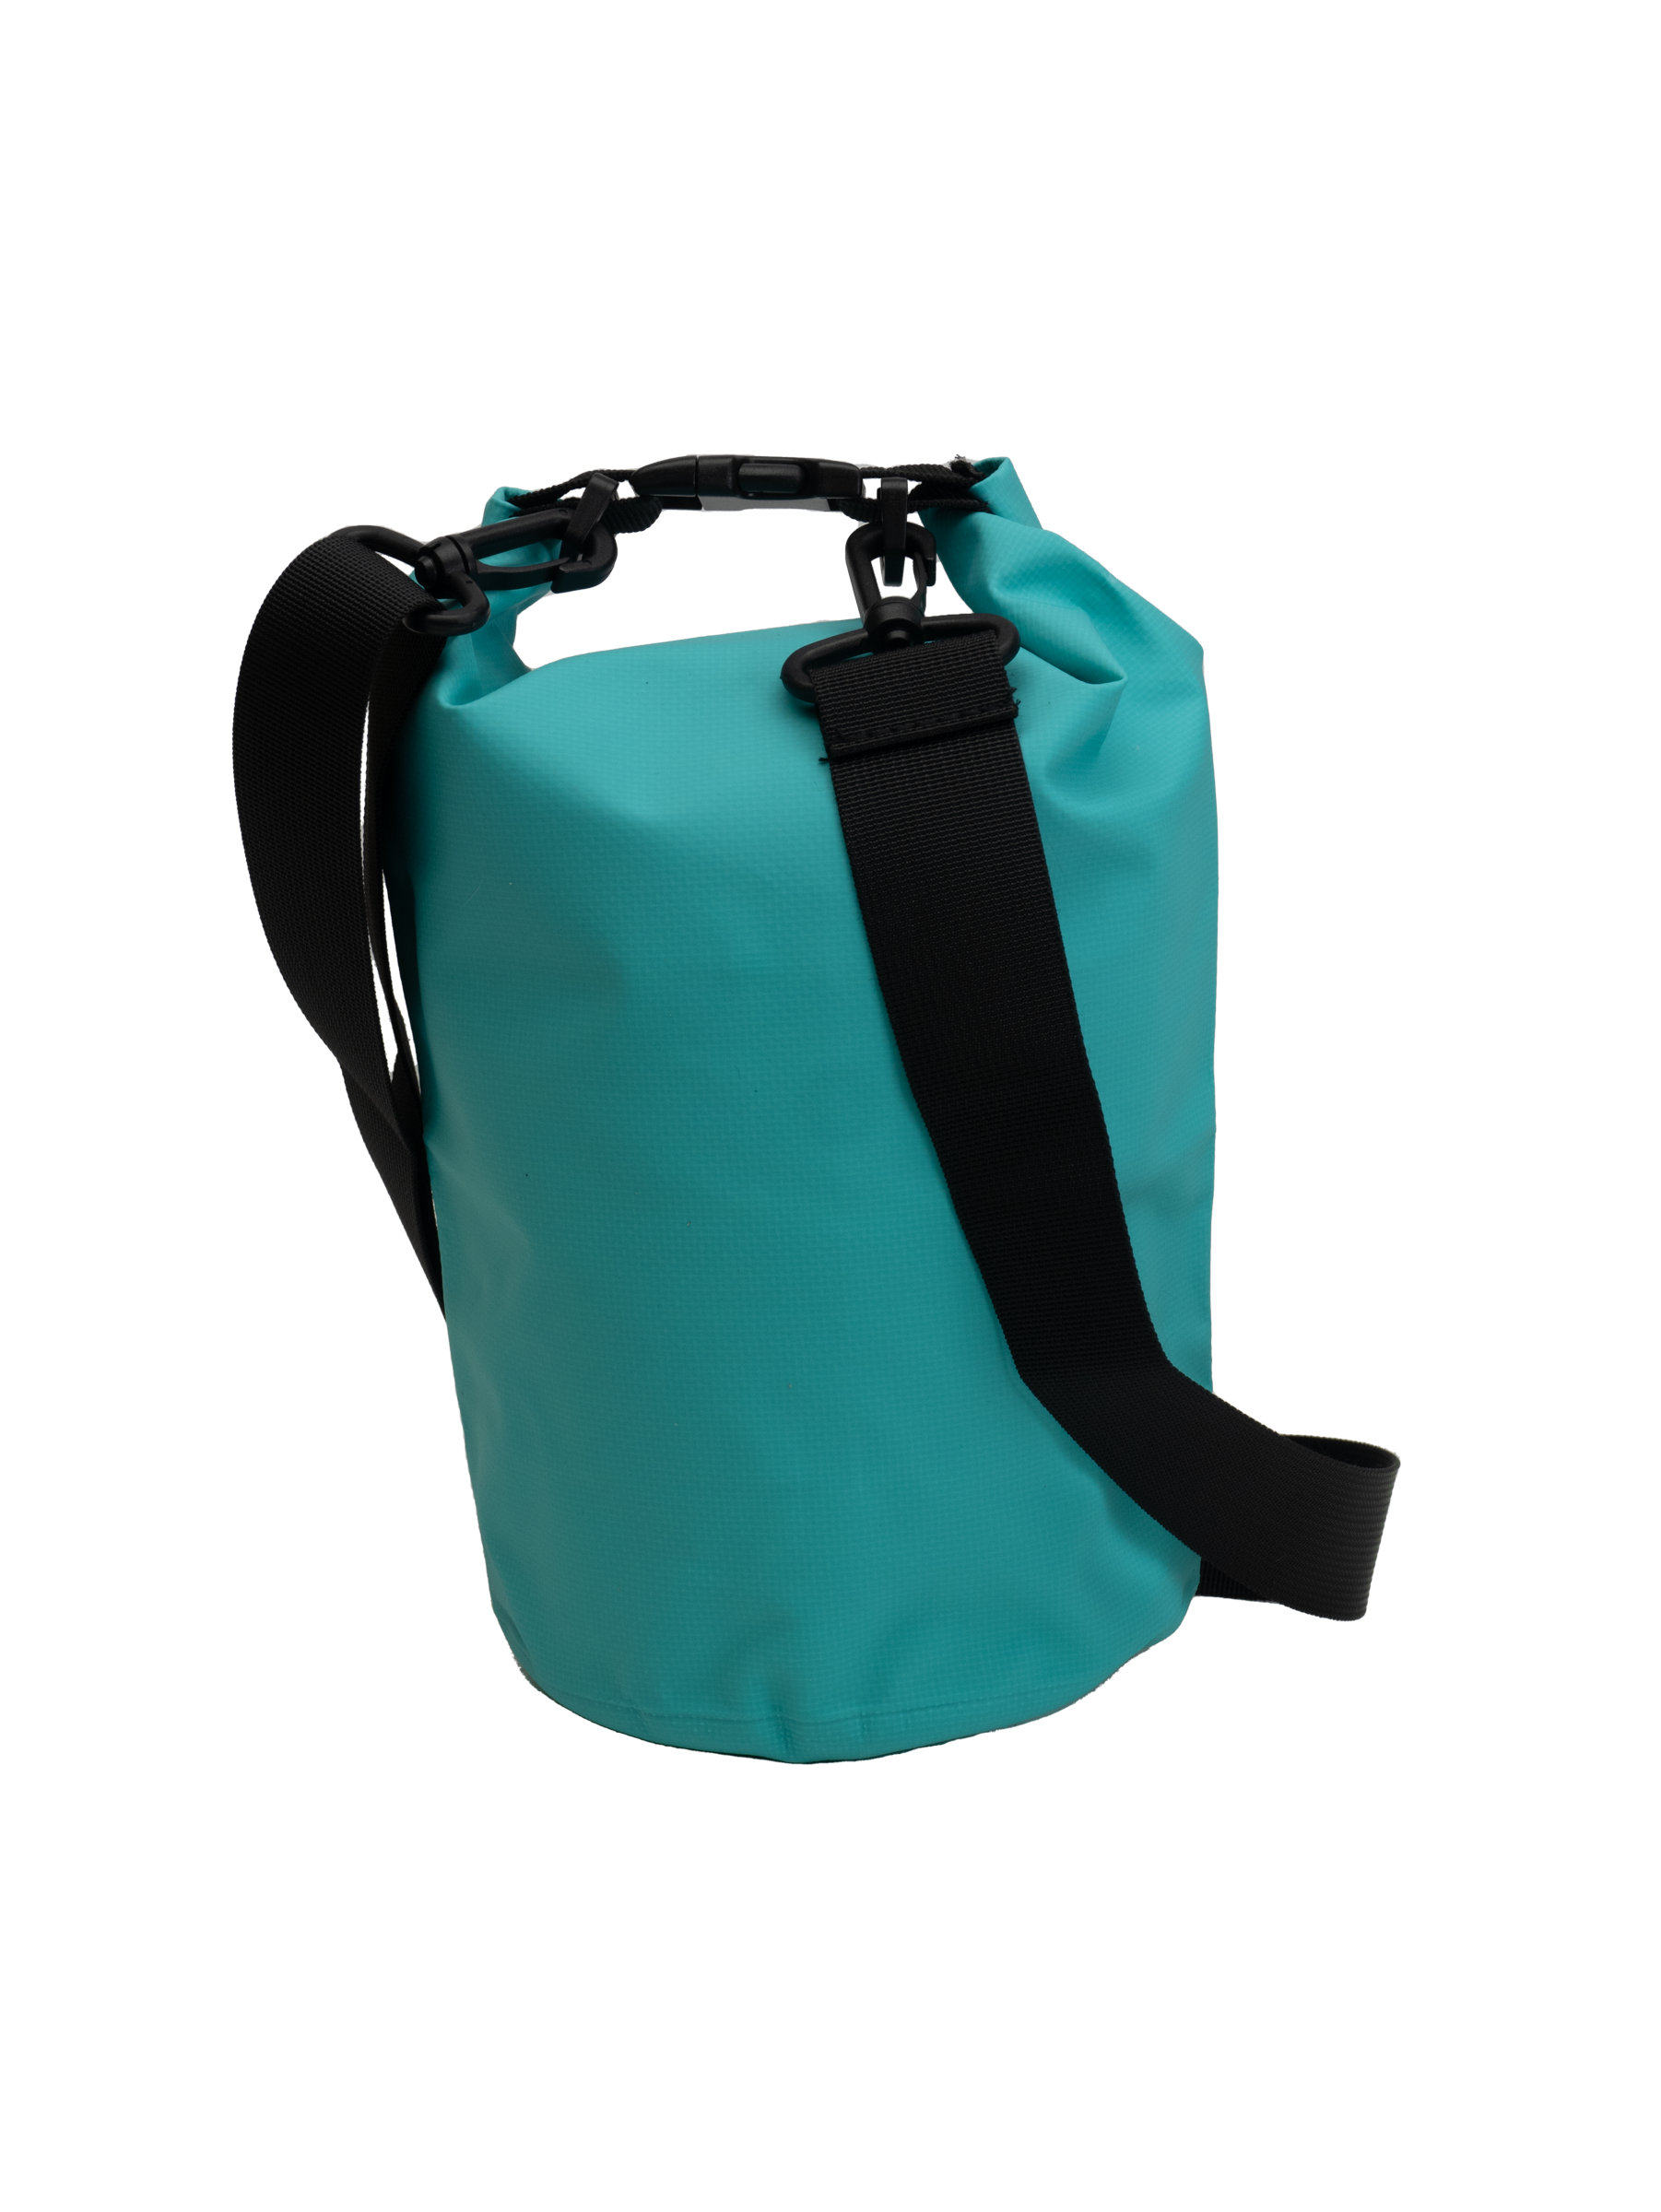 3L Dry Bag - Green